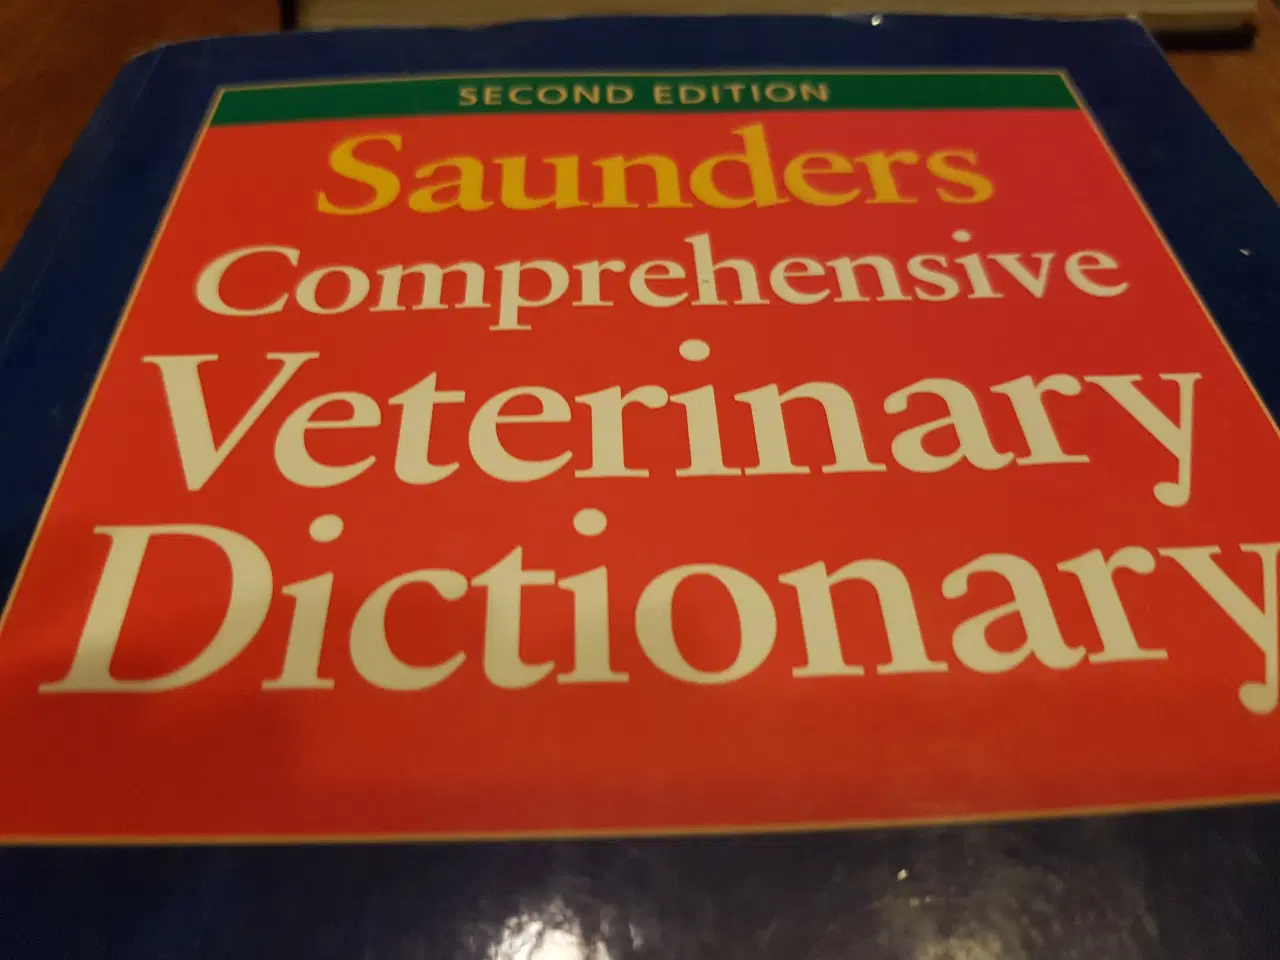 Billede 3 - Veterinary Dictionary, Saunders